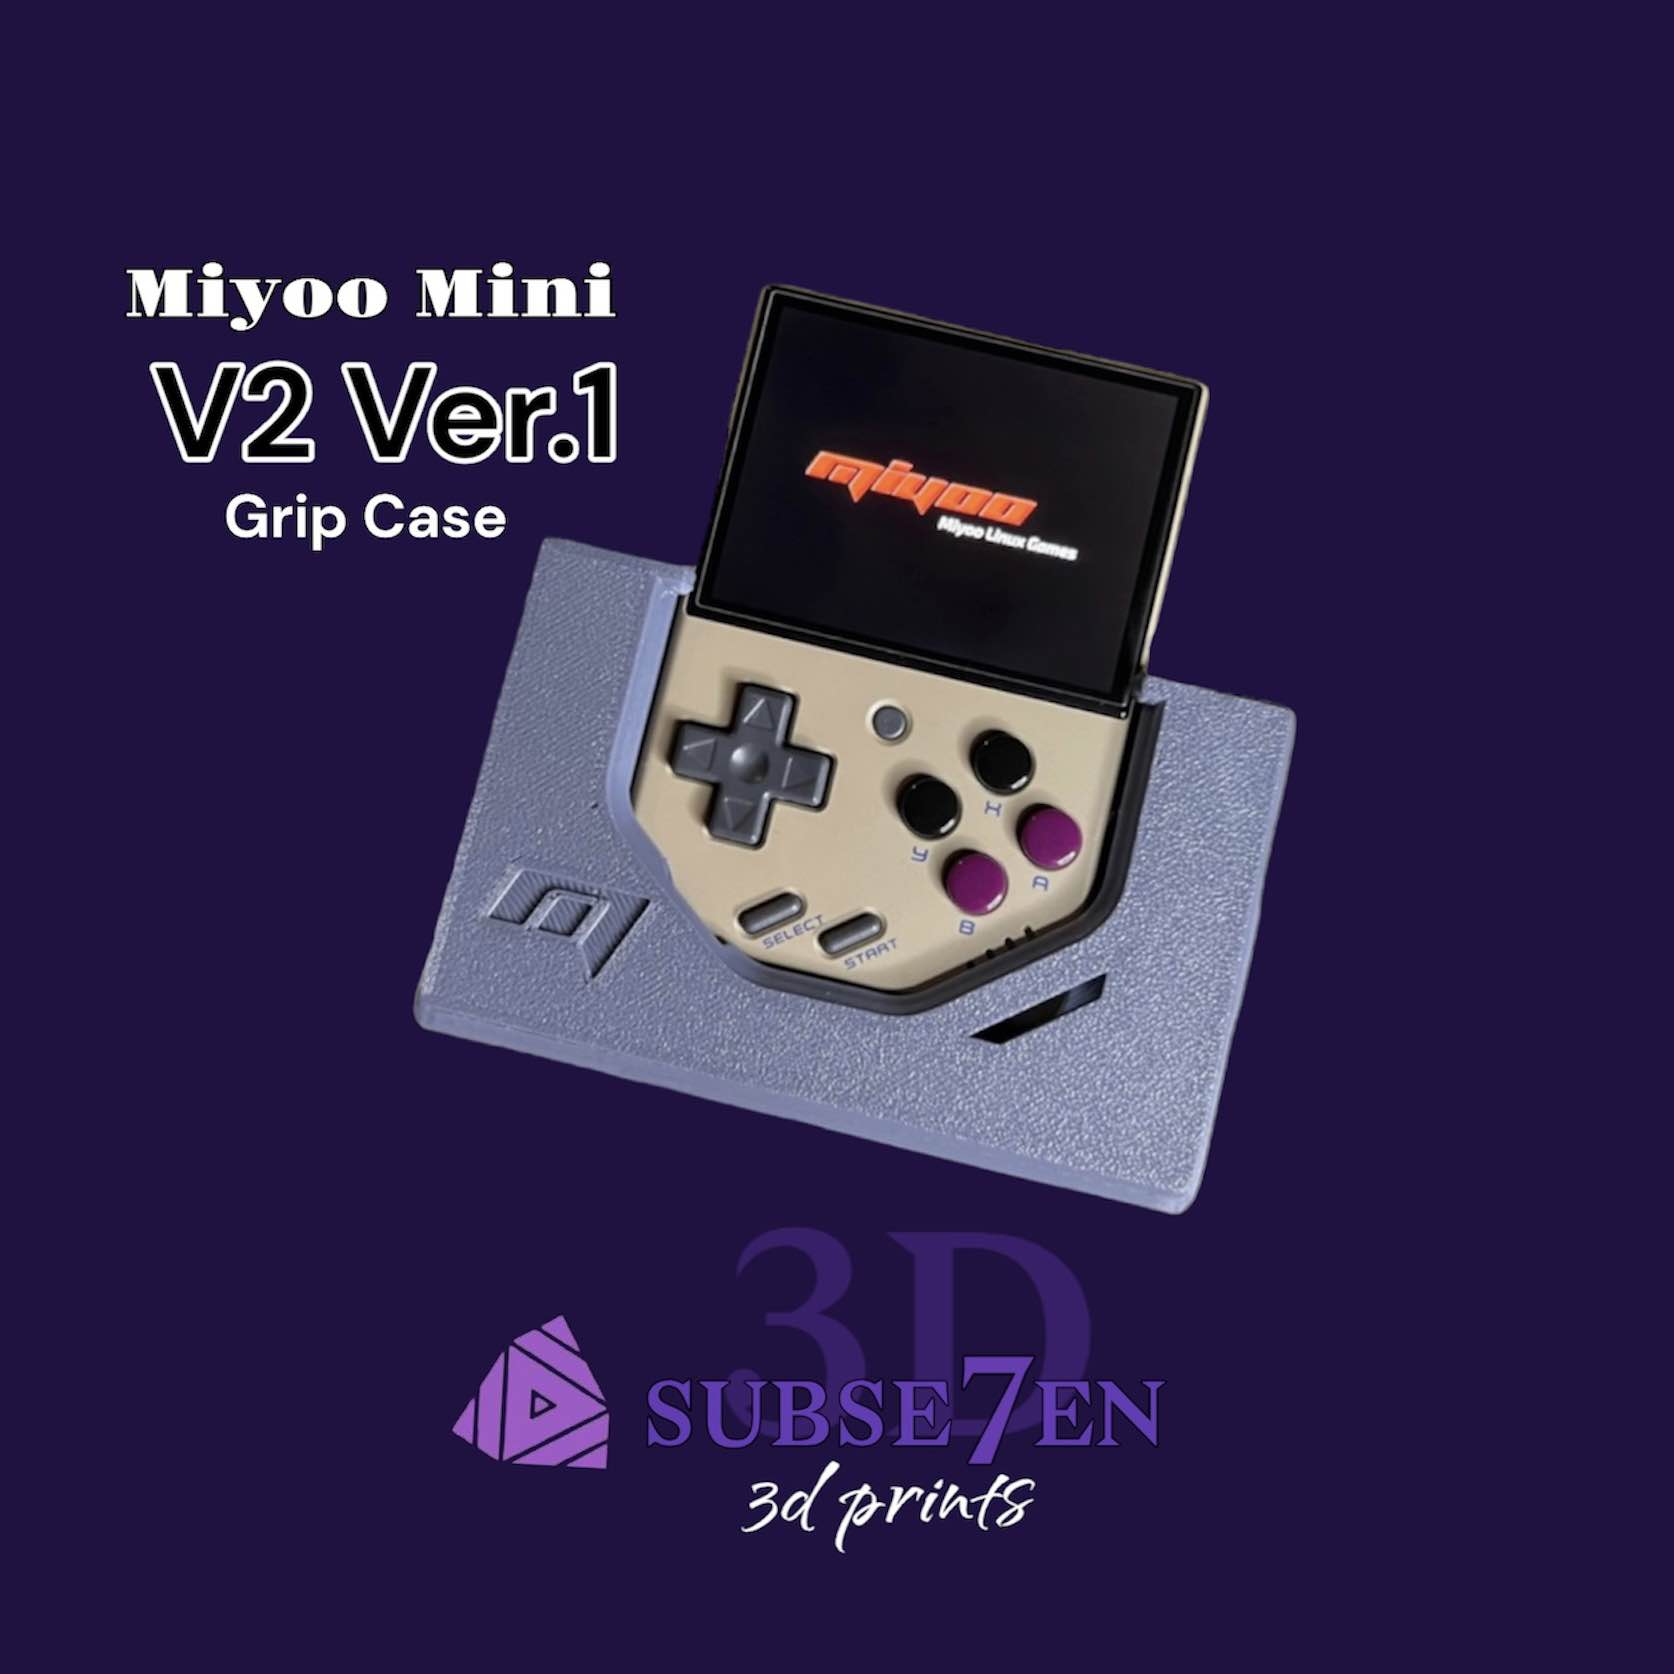 Miyoo Mini Grip Case V2 Retro Gaming Handheld Gaming Accessories